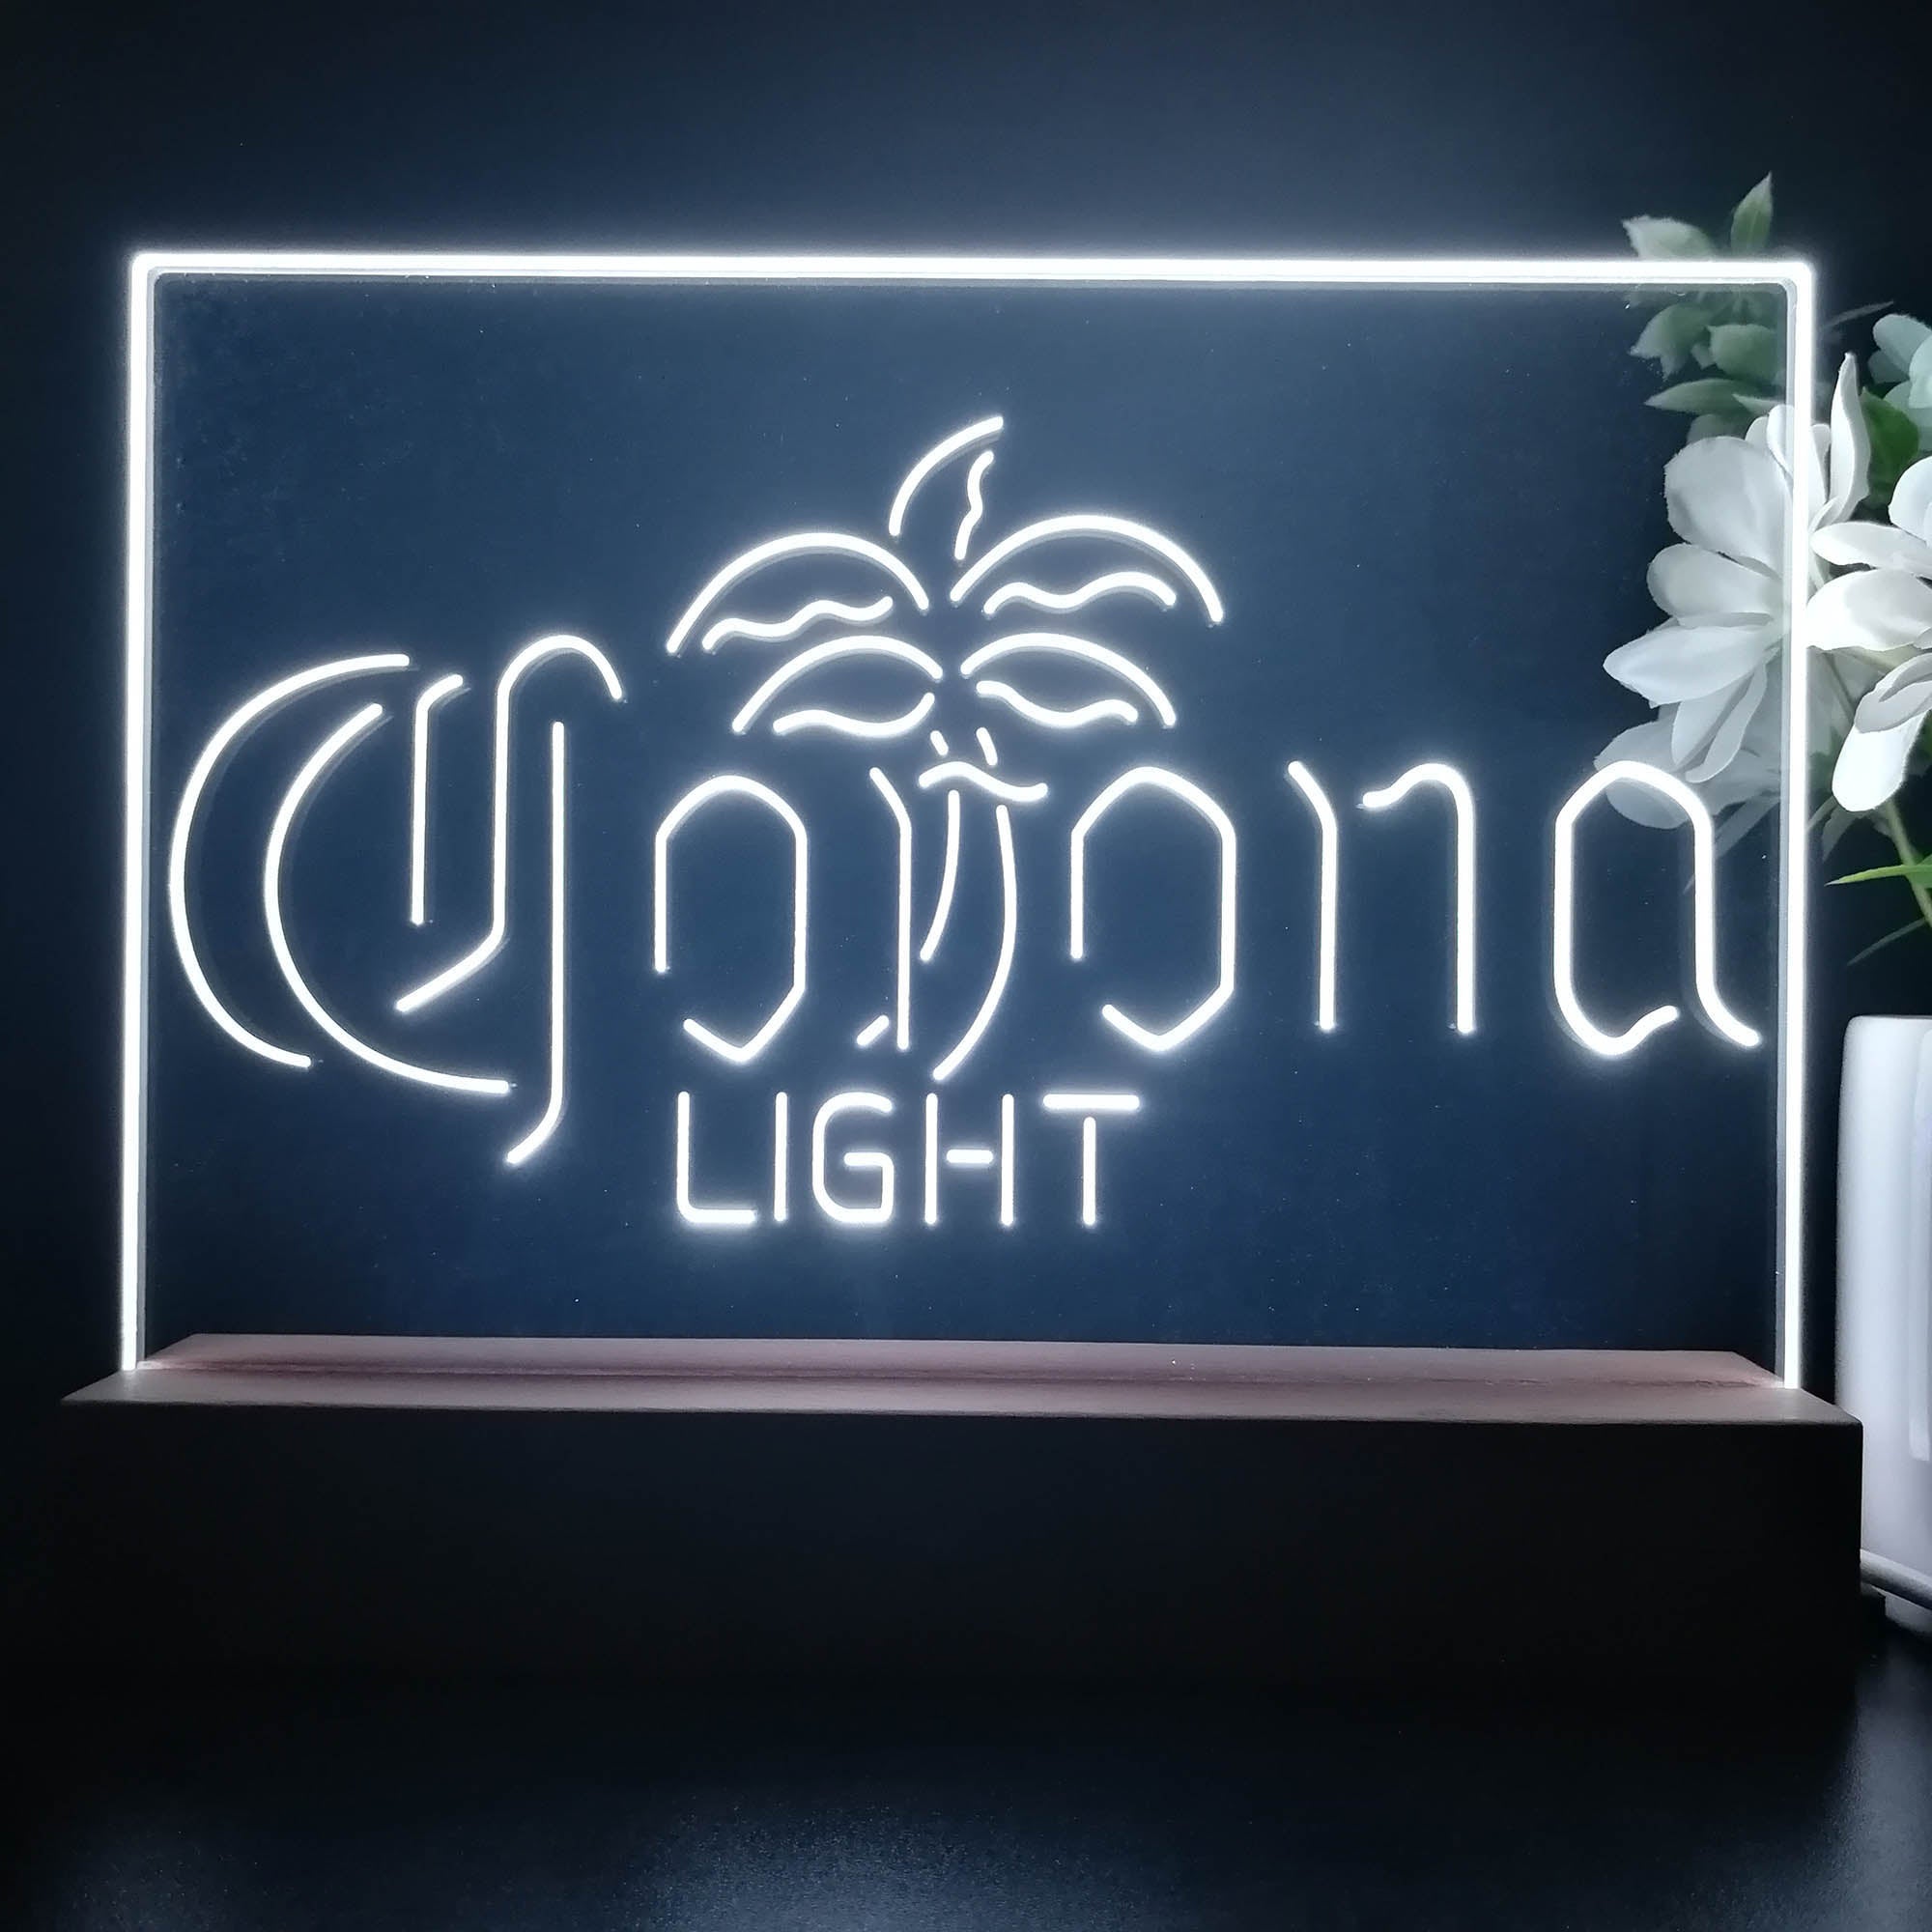 Coronas Light Palm Tree Middle Neon Sign Pub Bar Lamp